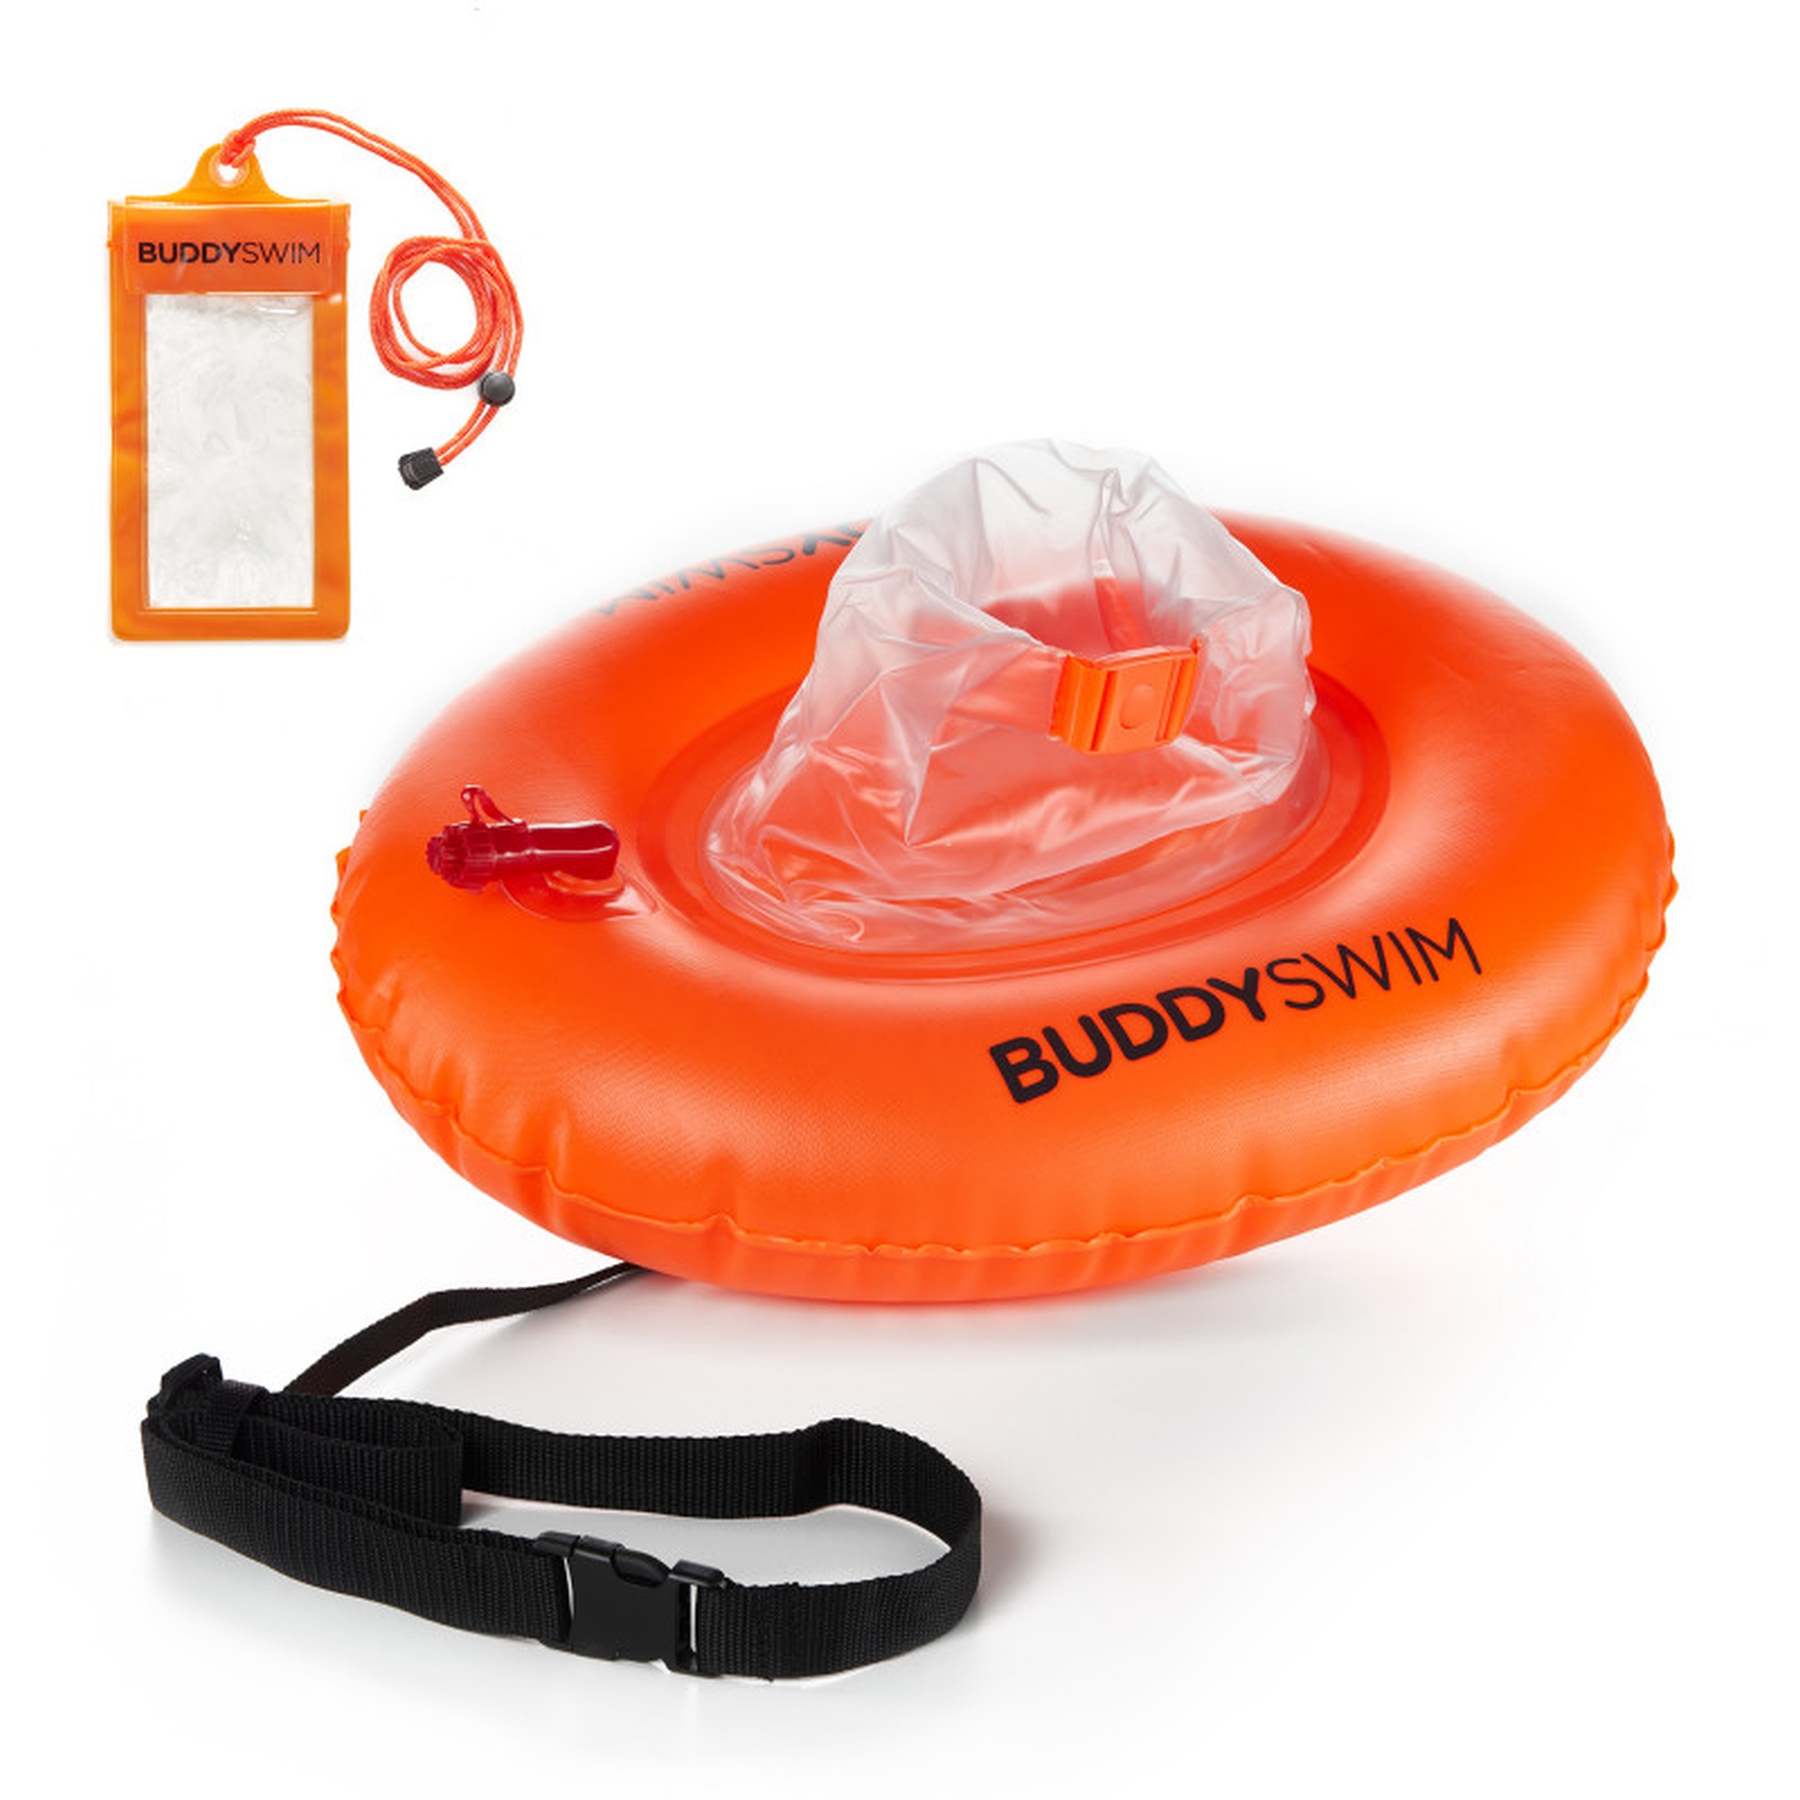 Productfoto van Buddyswim Hydrastation Buoy - with waterproof Phone Bag